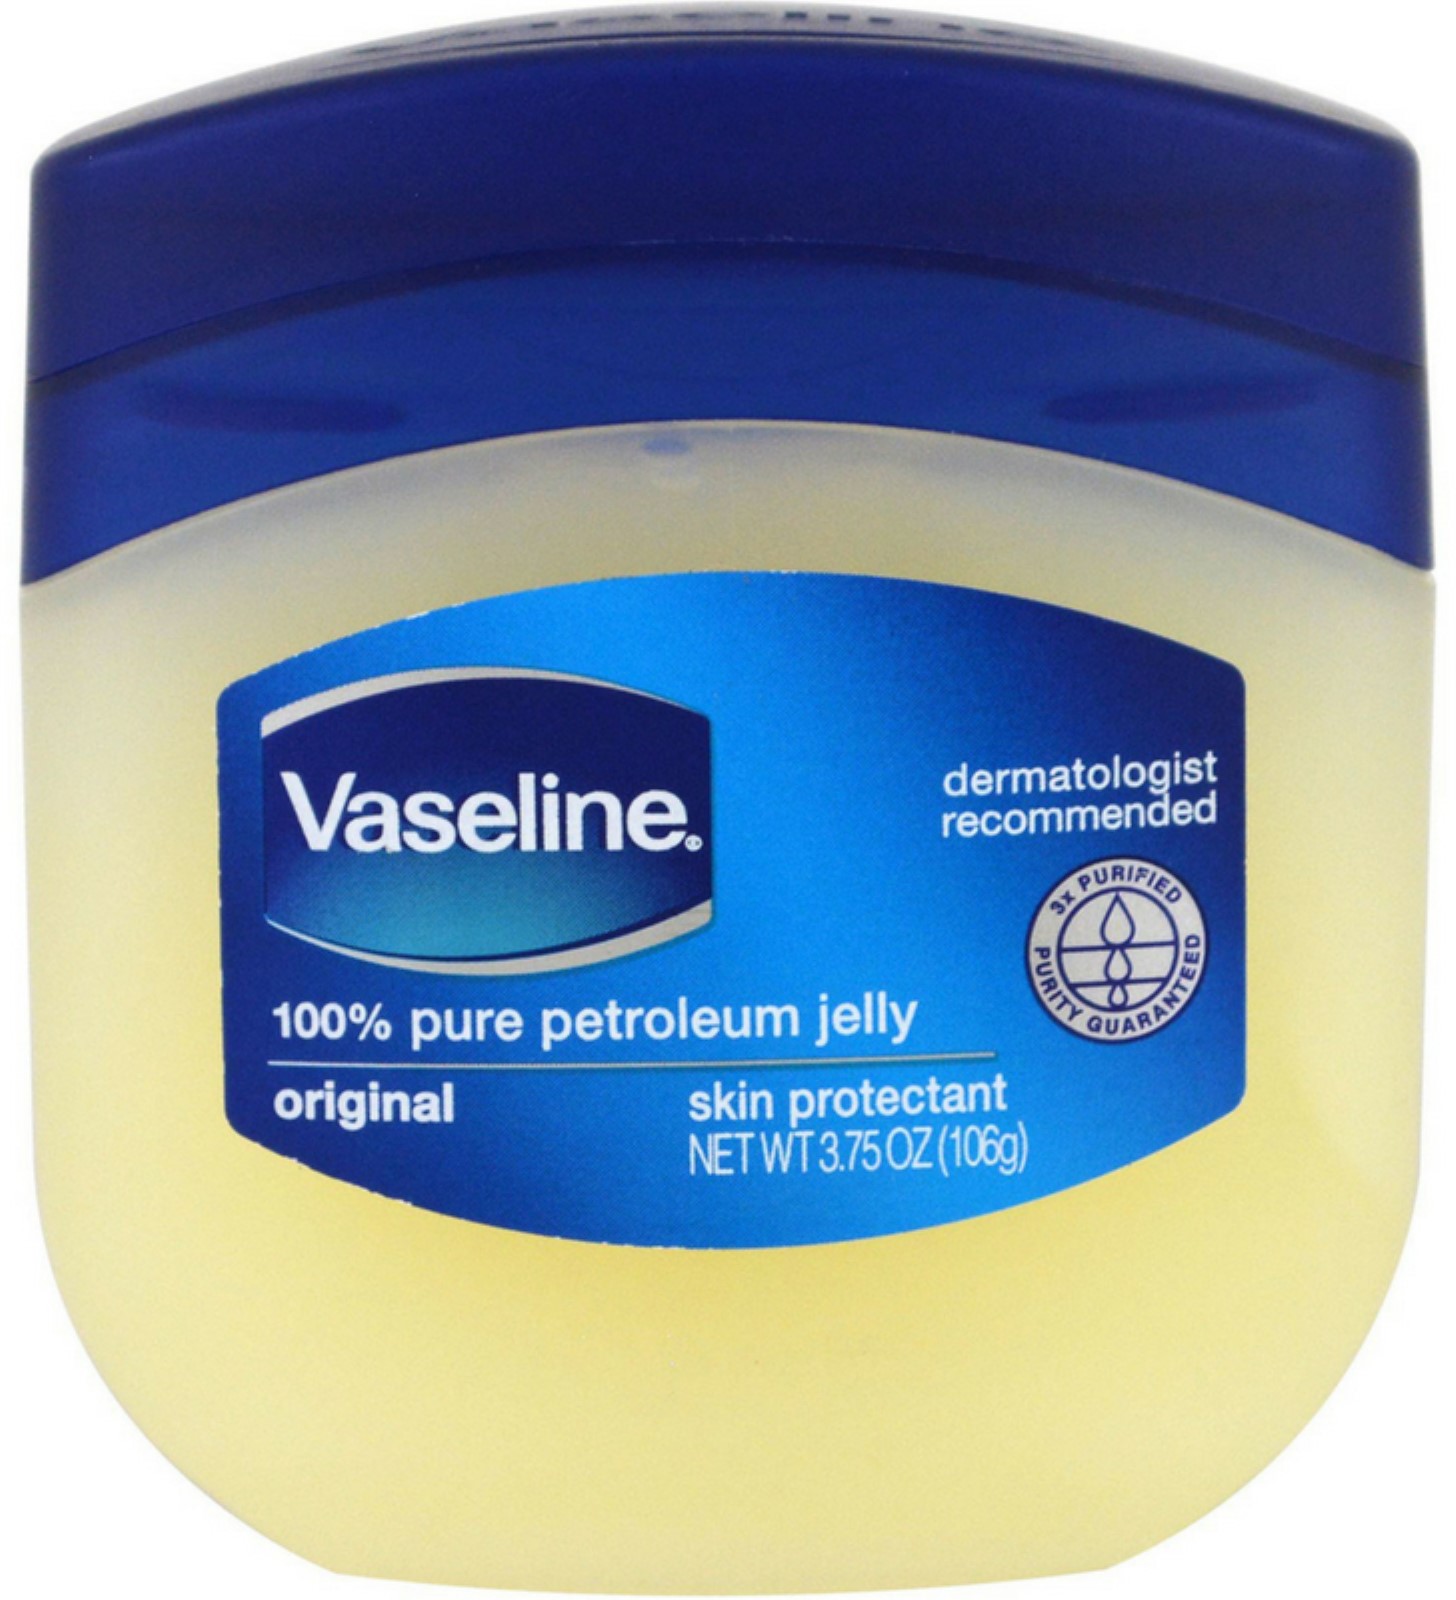 Vaseline 100% Pure Petroleum Jelly Skin Protectant 3.75 oz - image 1 of 2